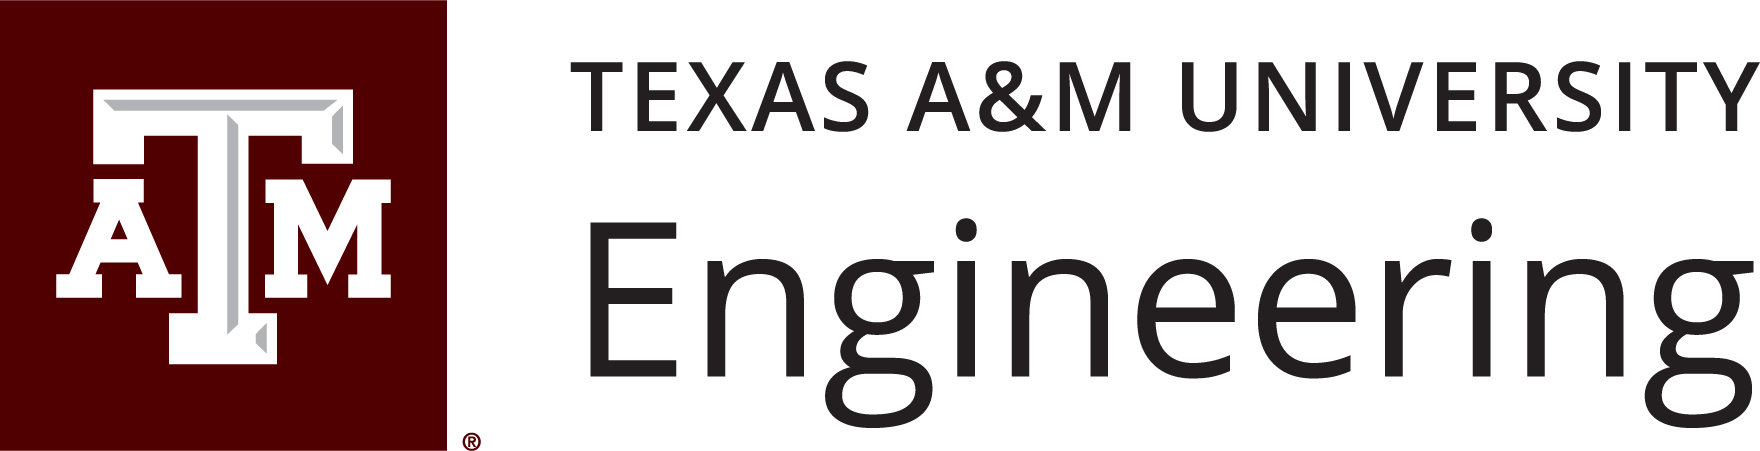 Texas A&M University Engineering